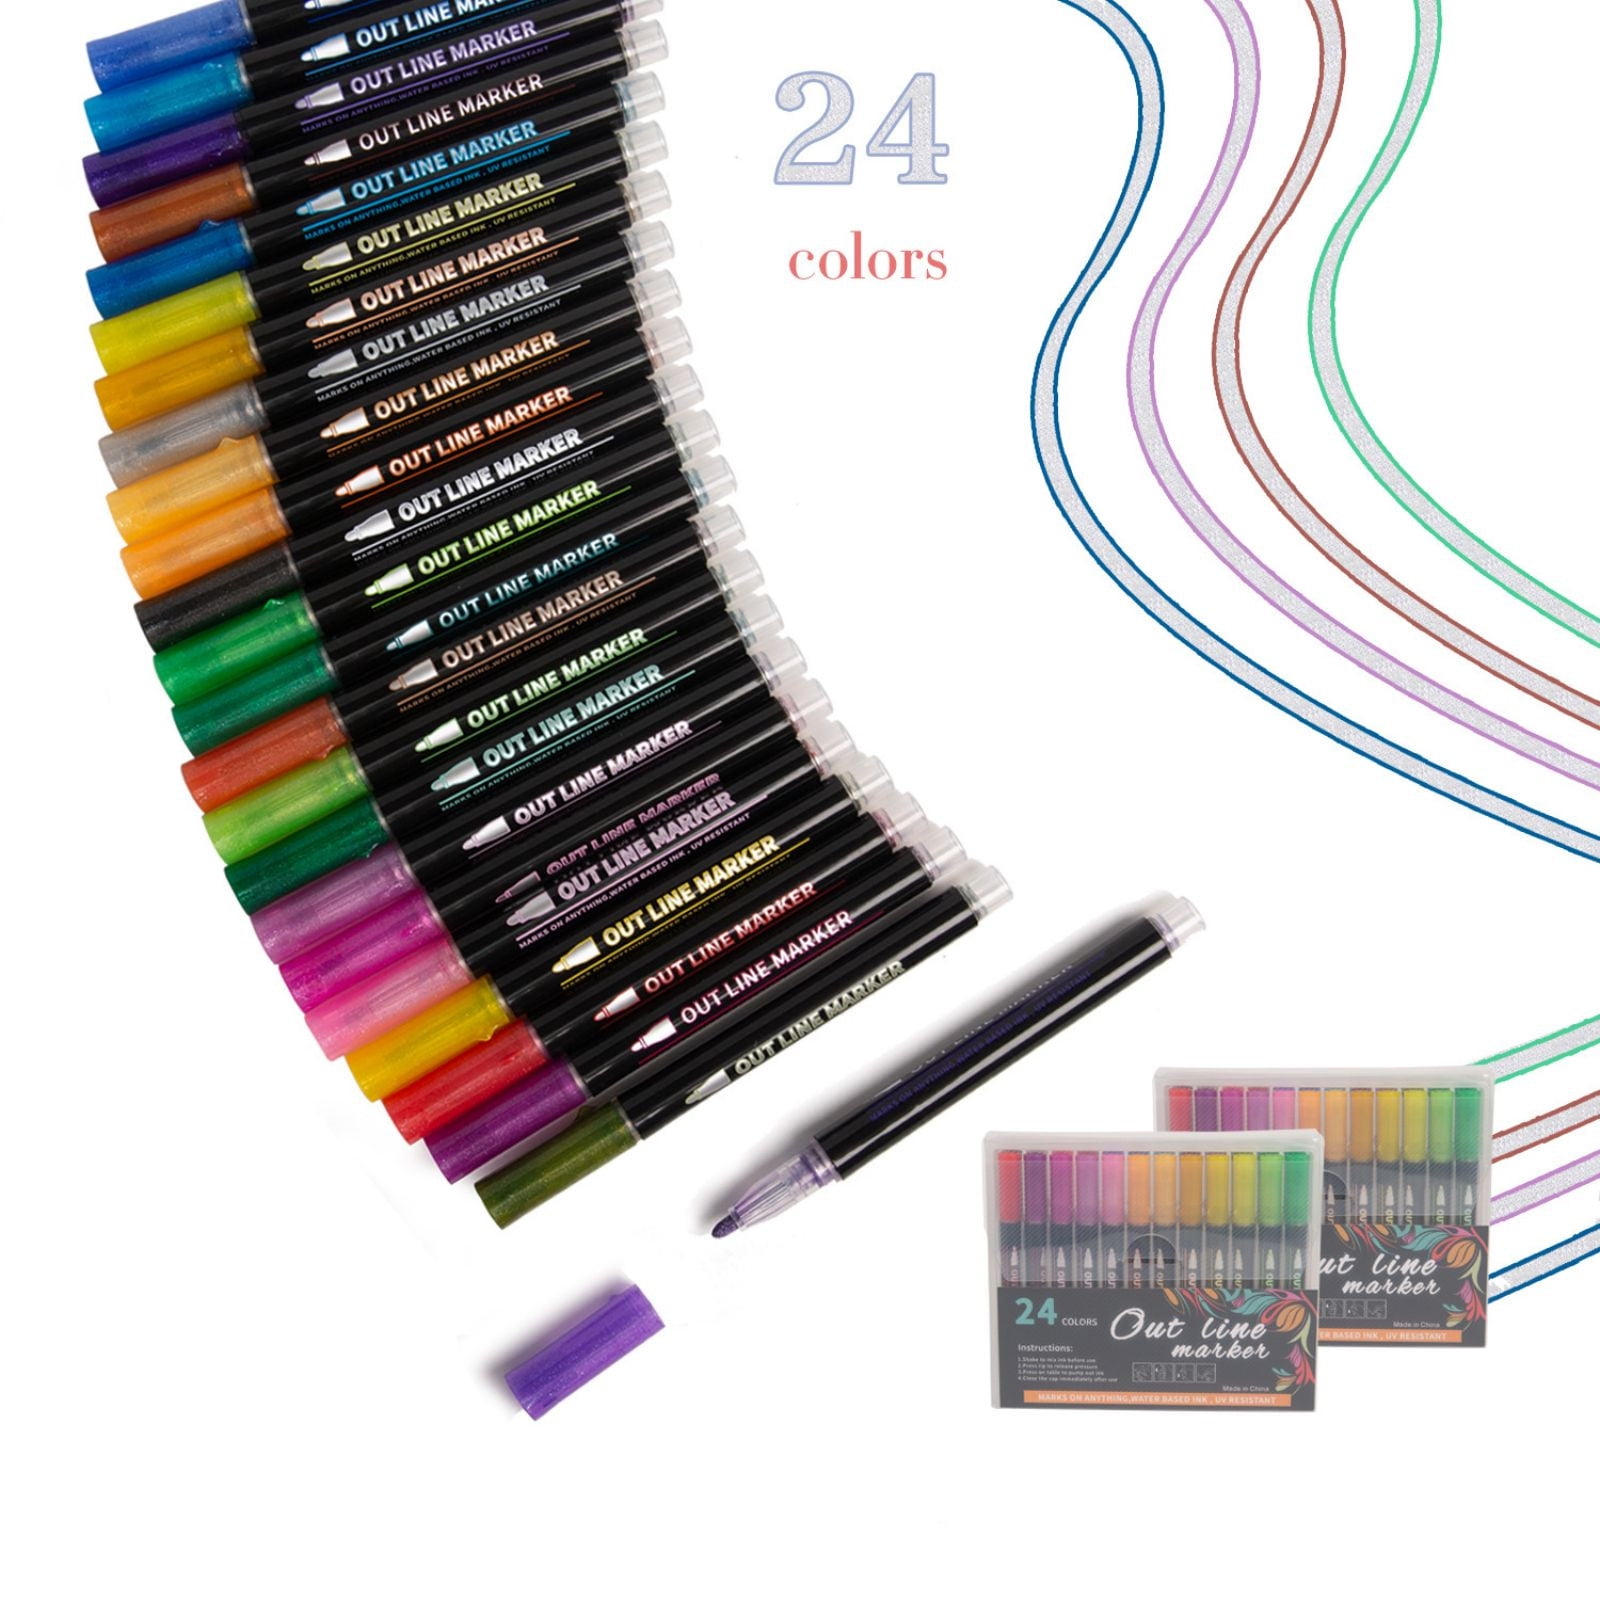 Self-outline Metallic Markers, Outline Marker Double Line Pen Journal Pens  Colored Permanent Marker Pens for Kids, Amateurs and Professionals  Illustration Coloring Sketching Card Make